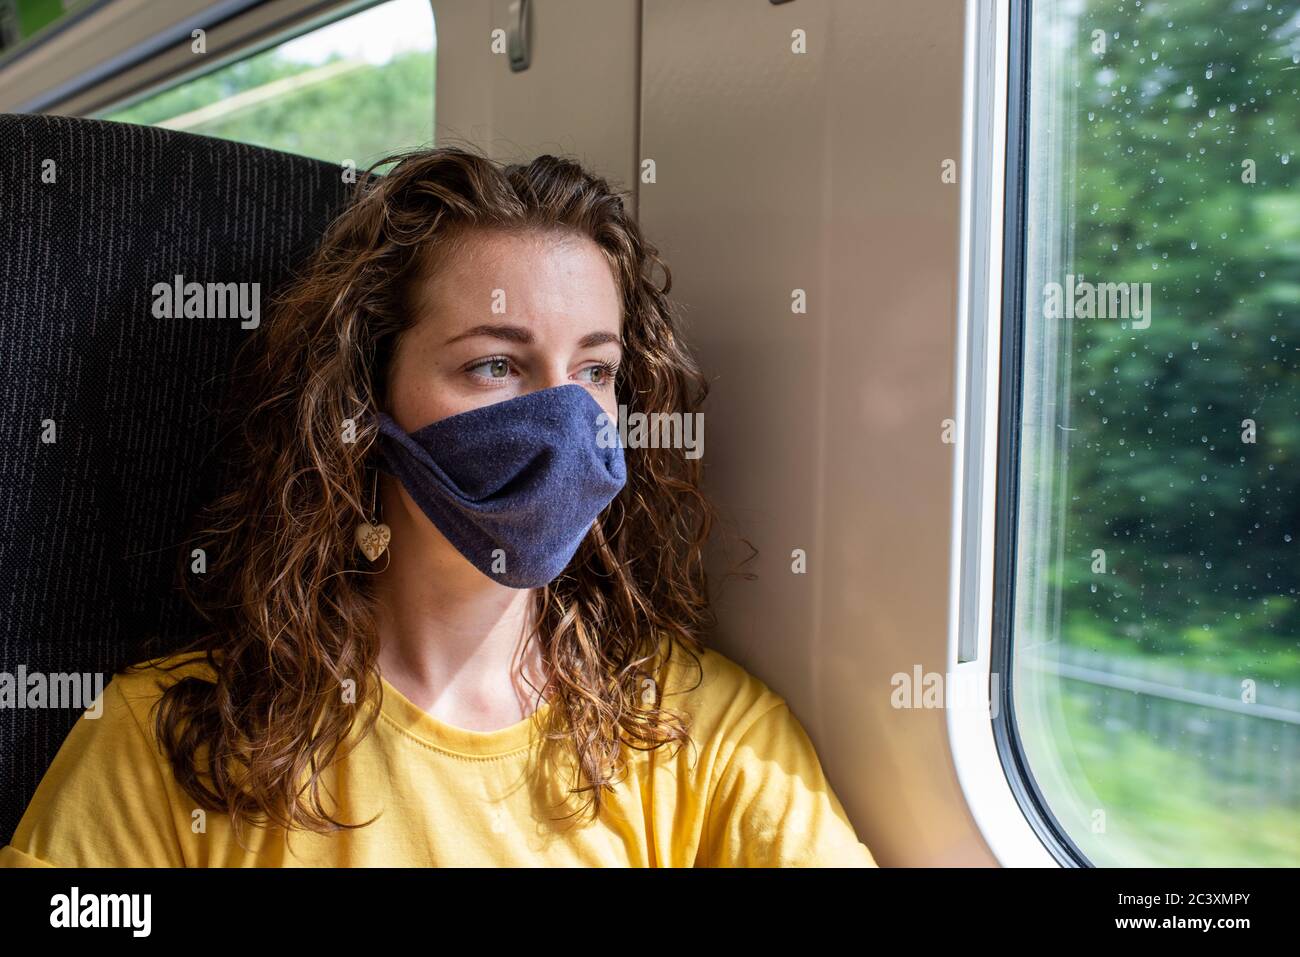 Wear a mask on the train coronavirus uk travel rail railway transport public social distance stay safe Stock Photo